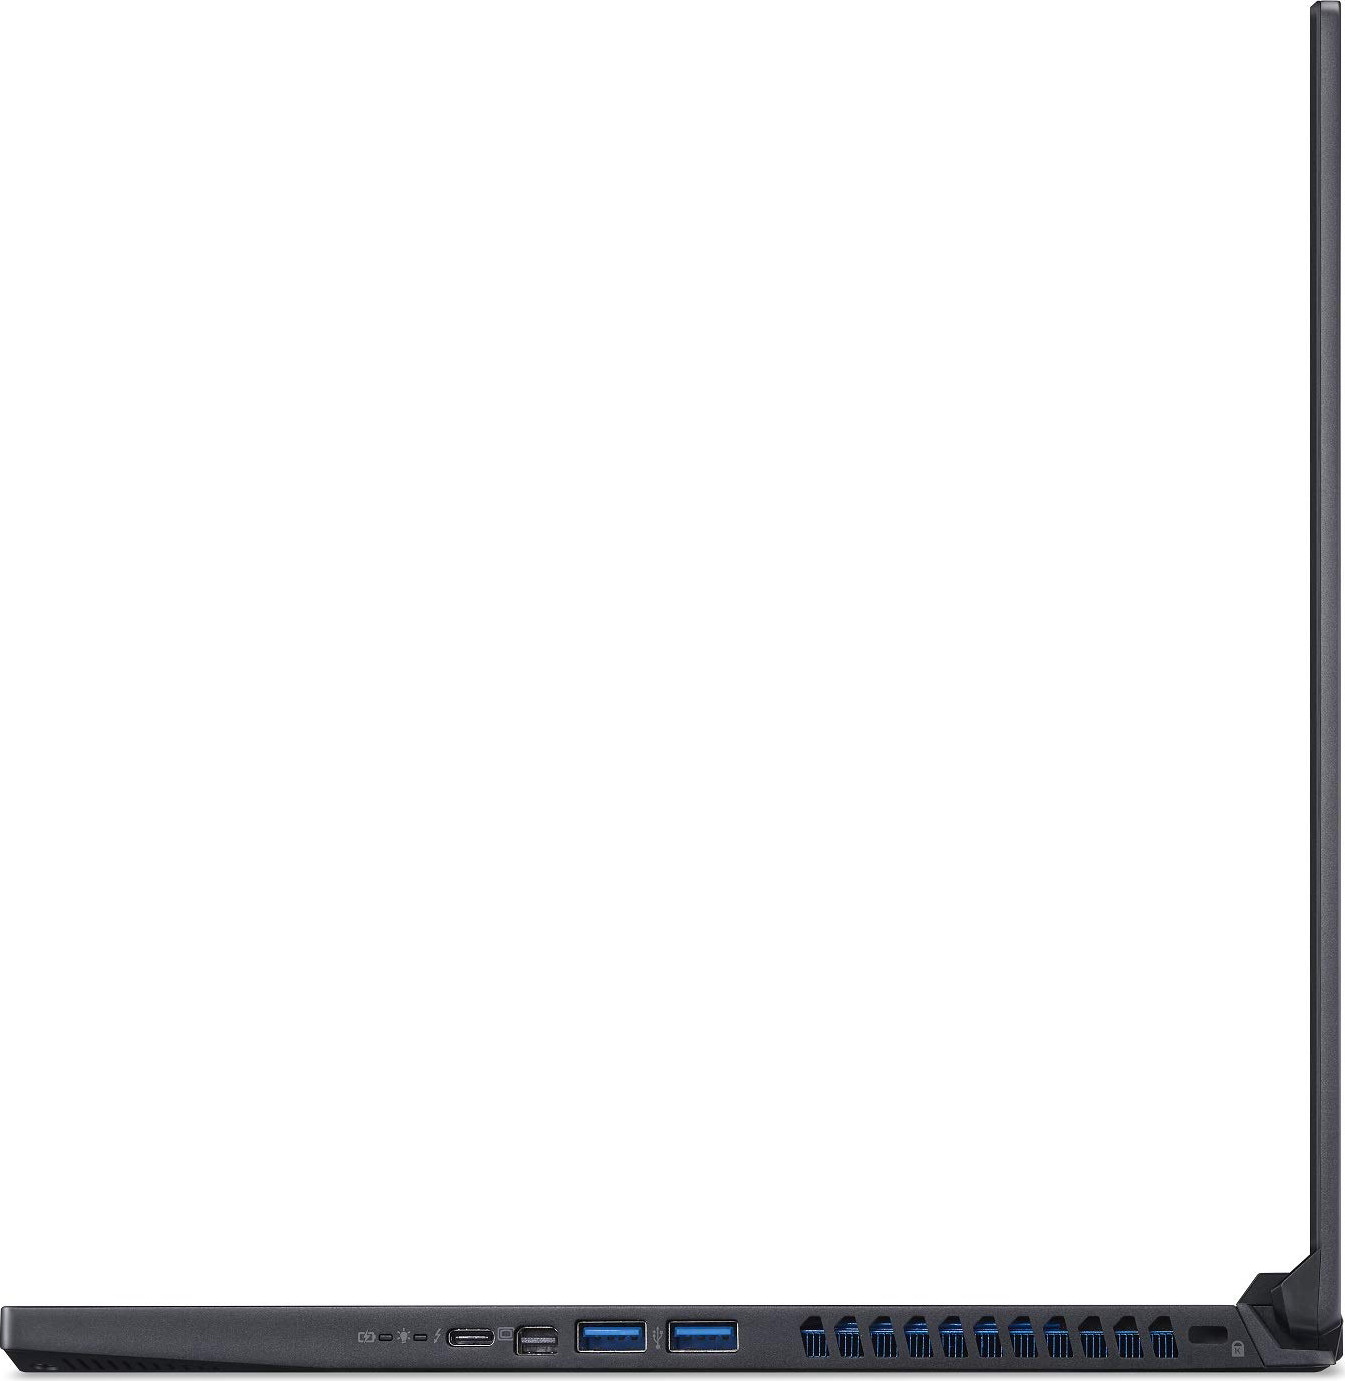 Acer Predator Triton 500 Thin & Light Gaming Laptop, Intel Core i7-8750H, GeForce RTX 2060 with 6GB, 15.6" Full HD 144Hz 3ms IPS Display, 16GB DDR4, 512GB PCIe NVMe SSD, RGB Keyboard, PT515-51-71VV